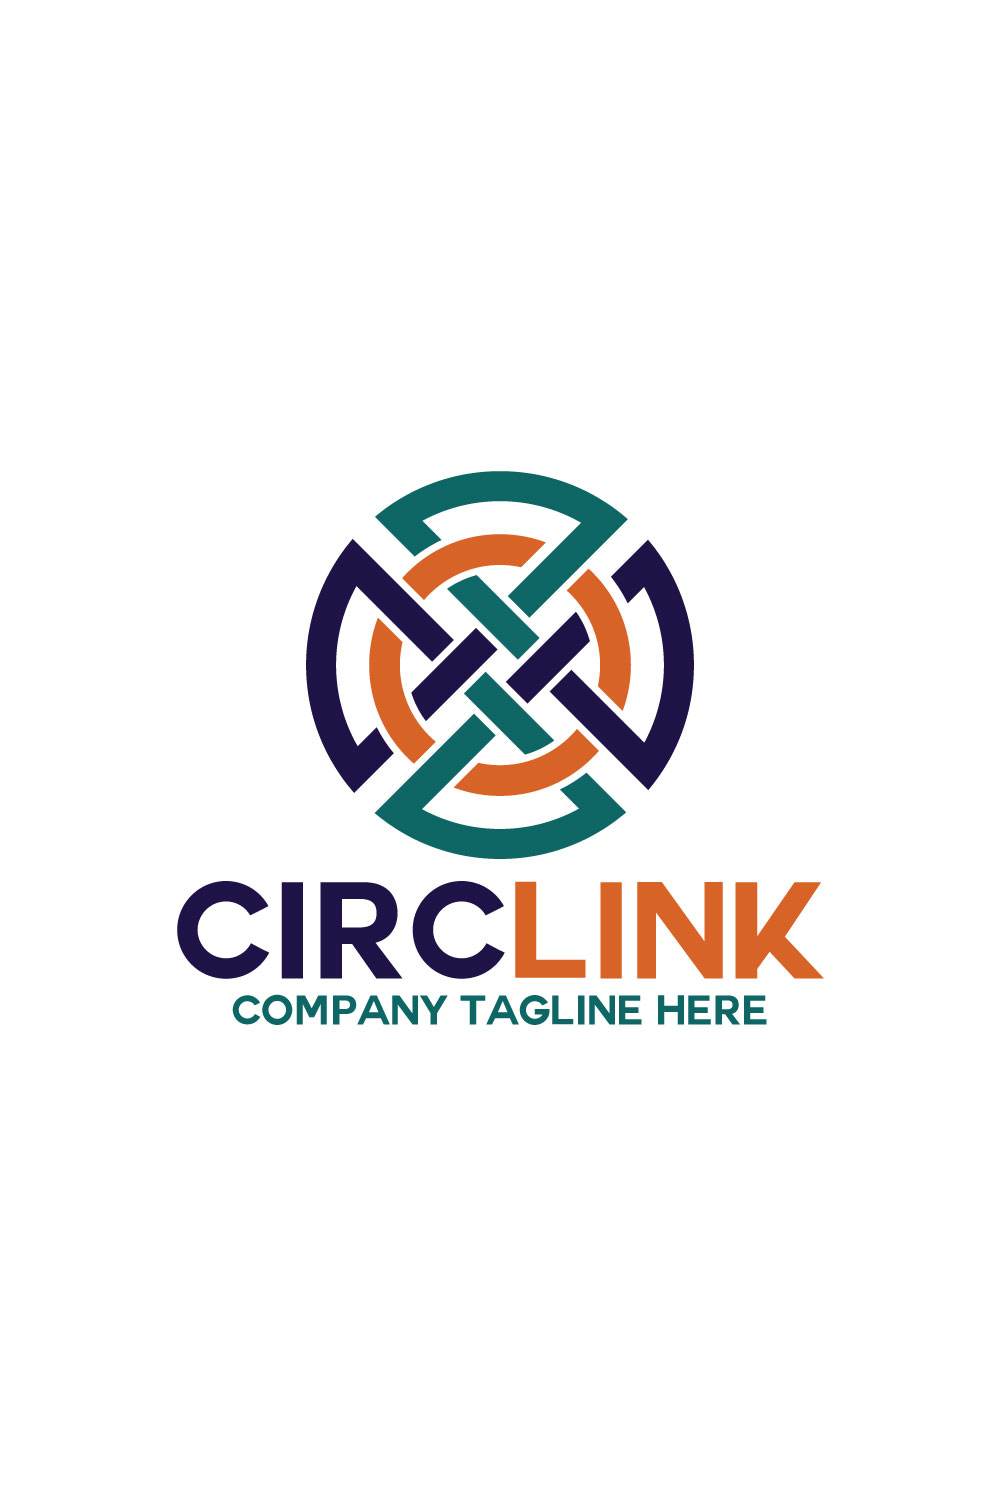 Circlink - Circle Link Logo pinterest preview image.